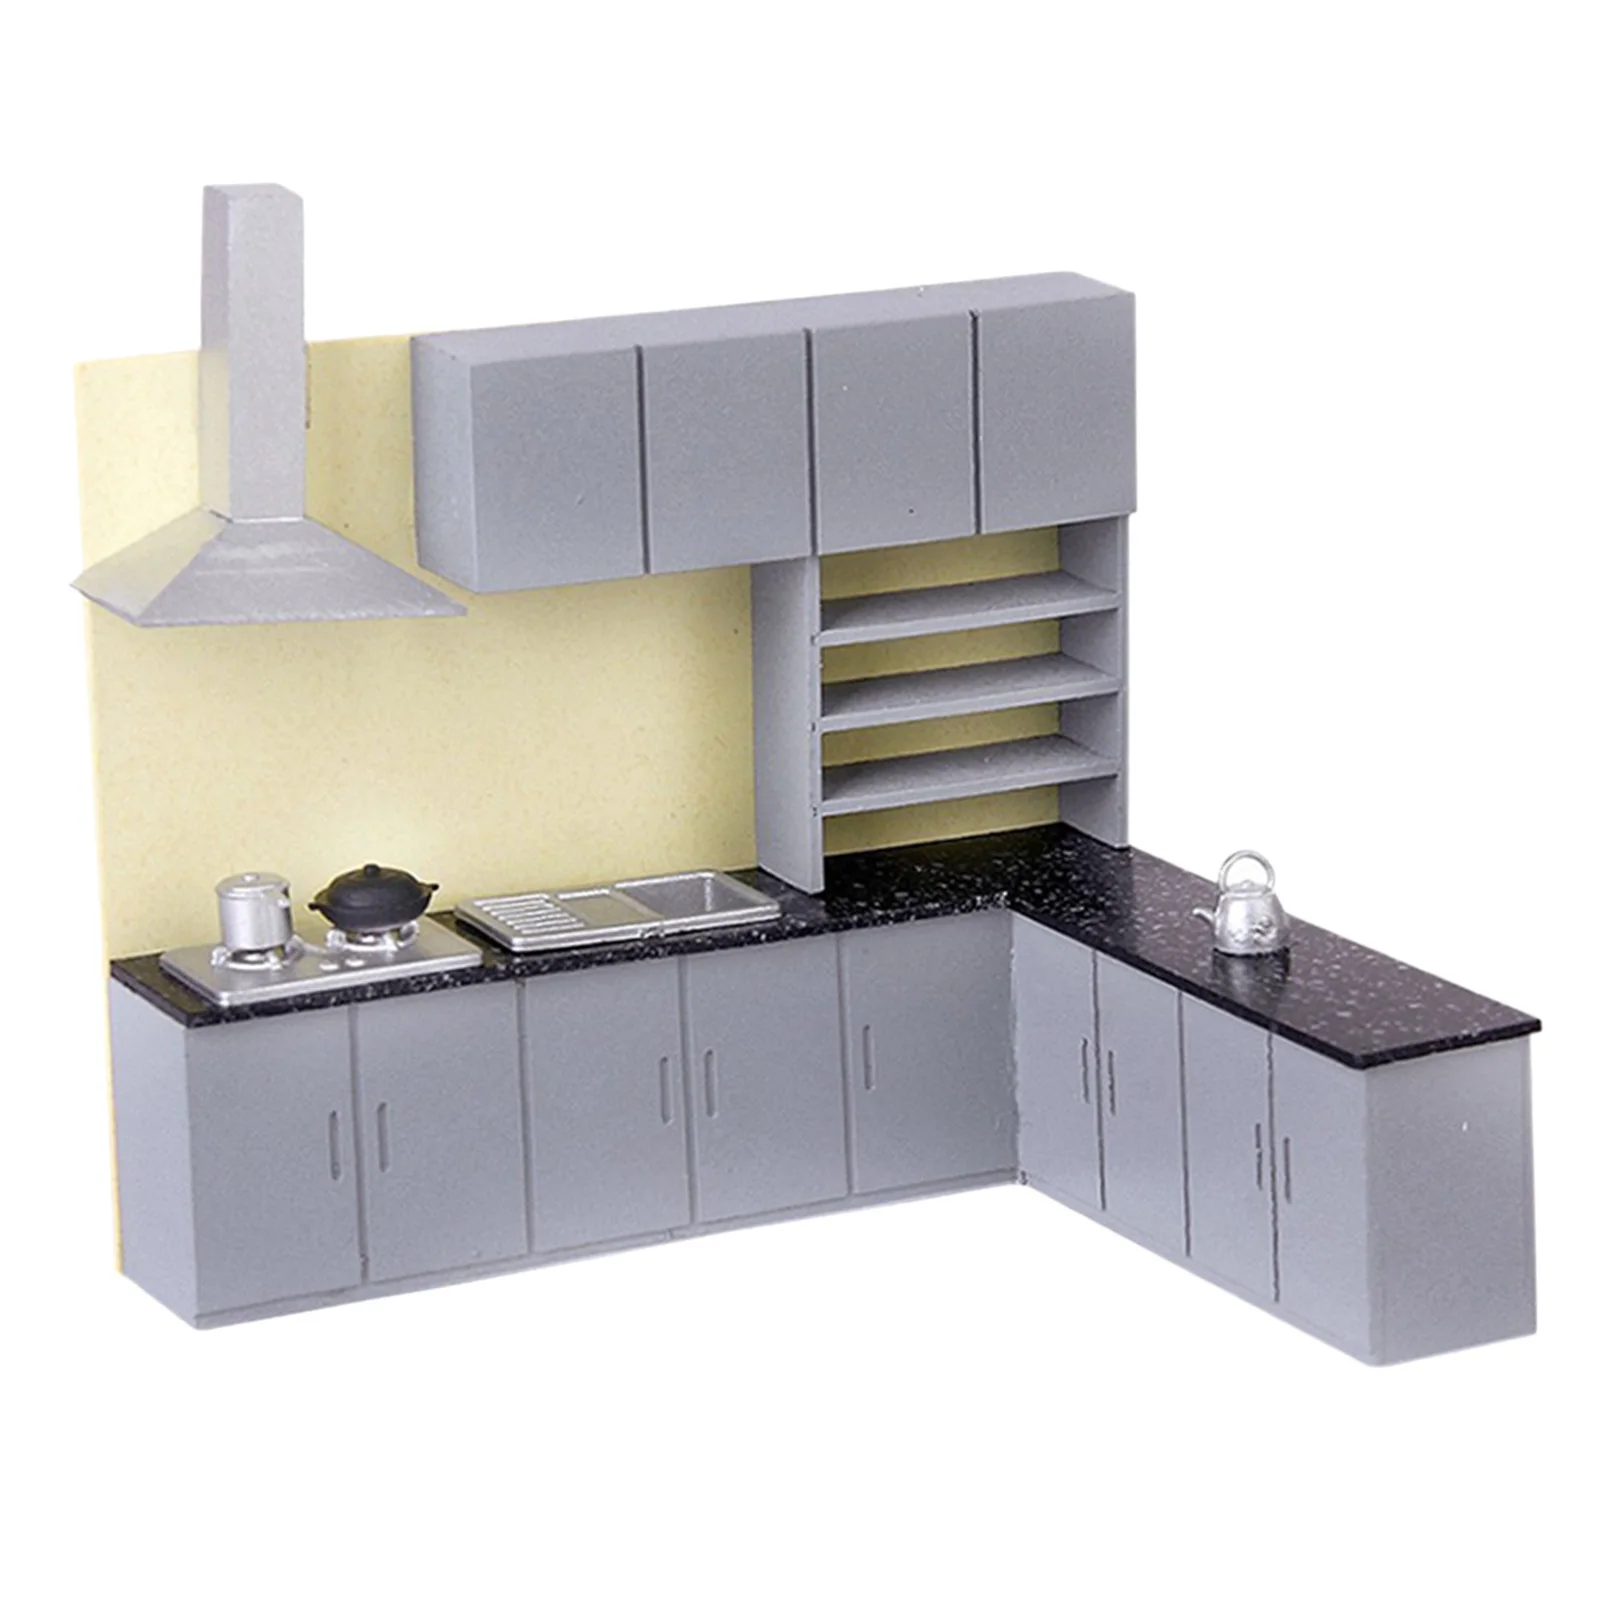 Dollhouse Kitchen Dining Room Furniture Decor - 1/25 Scale Miniature Kitchen Cabinet Cupboard Model Set